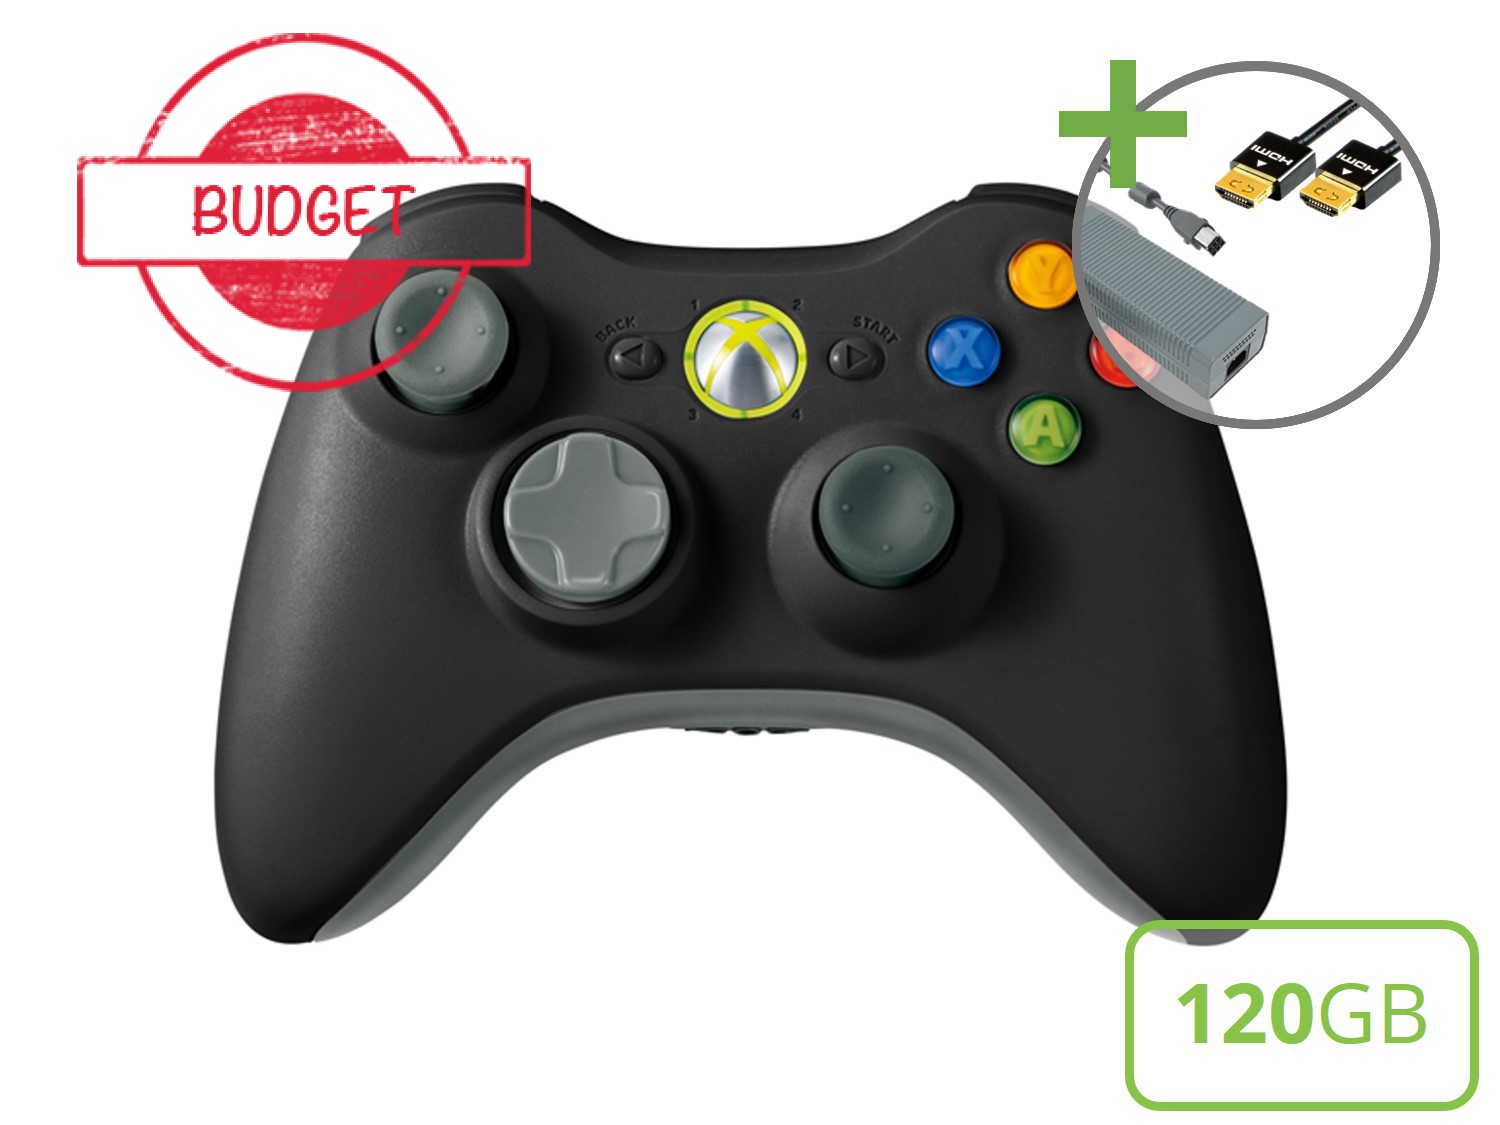 Microsoft Xbox 360 Elite Starter Pack - Forza Motorsport 3 and Halo 3: ODST Edition - Budget - Xbox 360 Hardware - 4